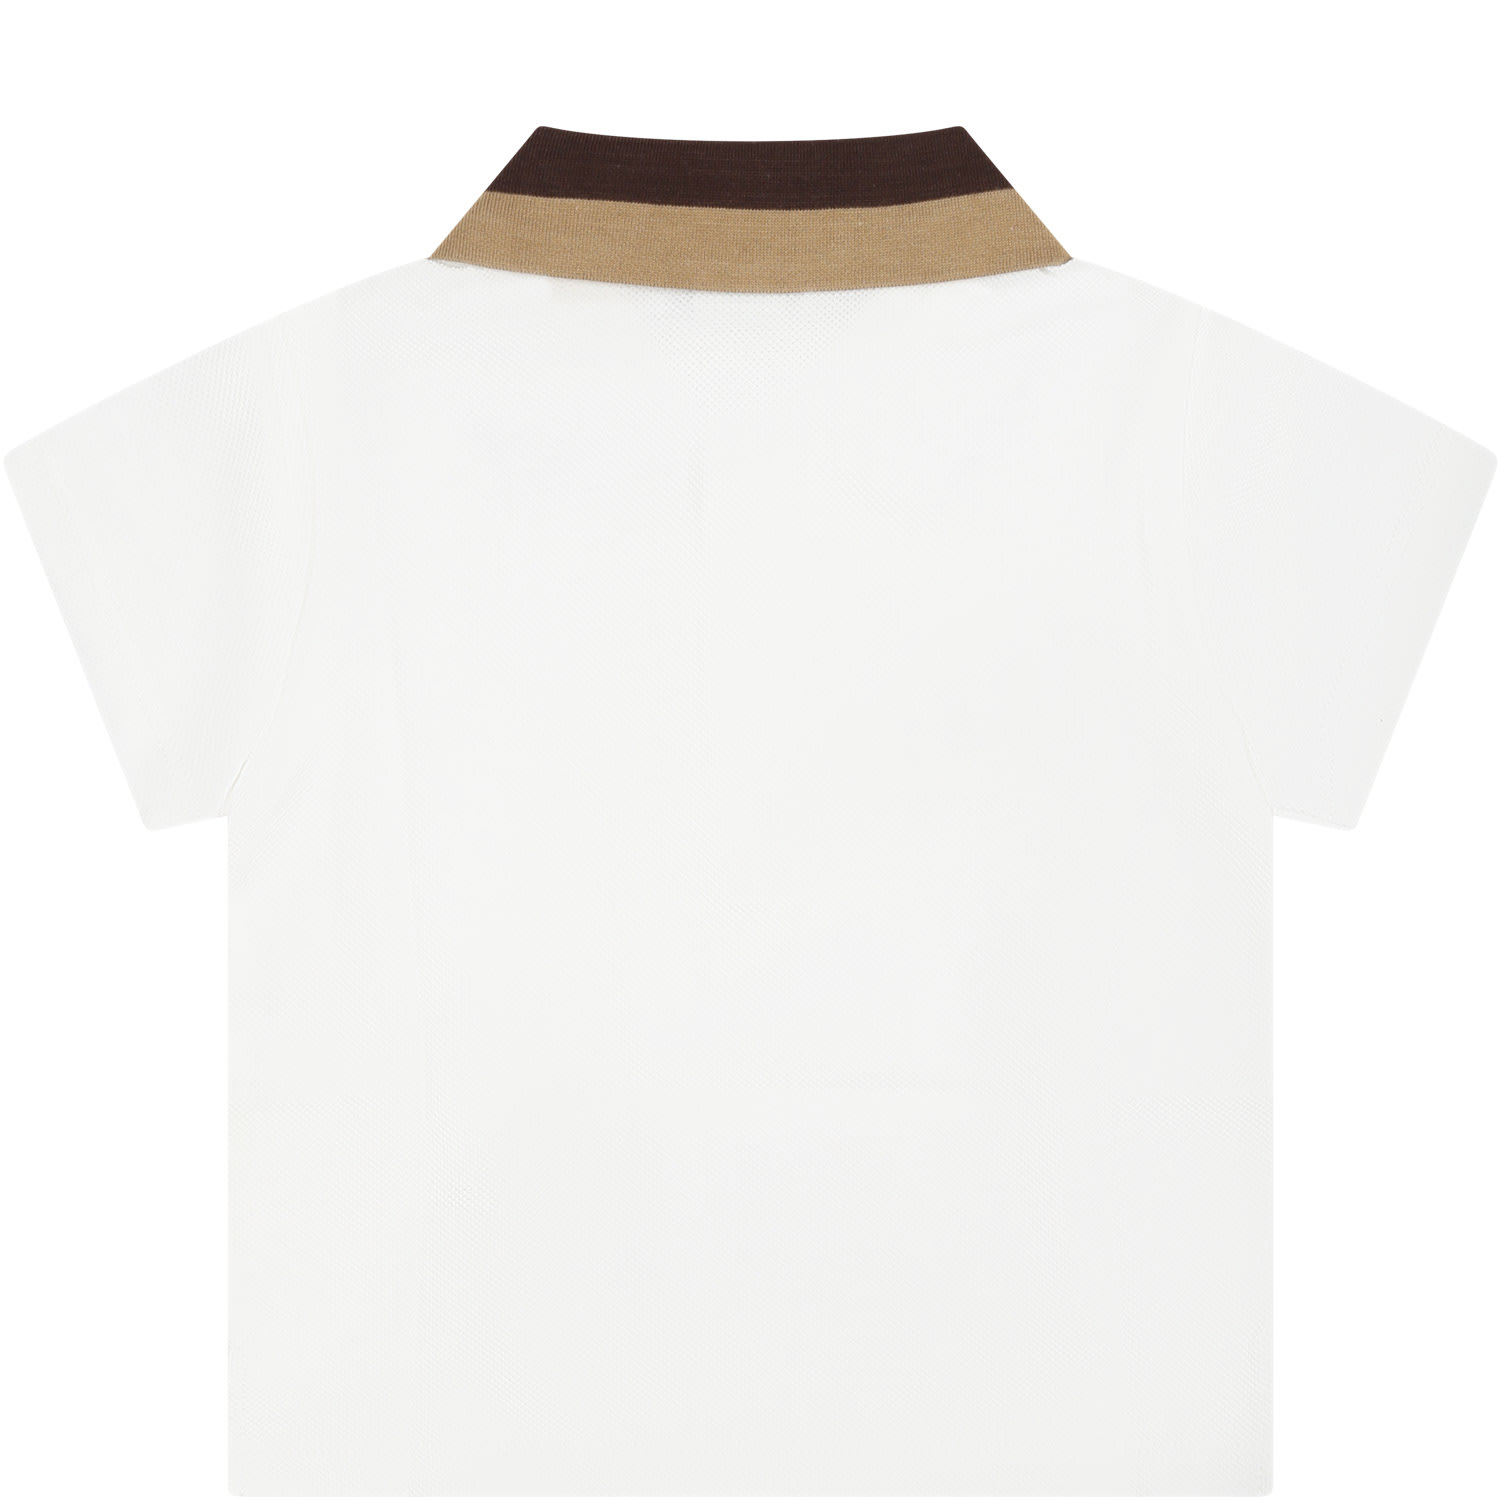 Shop Fendi White Polo Shirt For Baby Boy With Logo